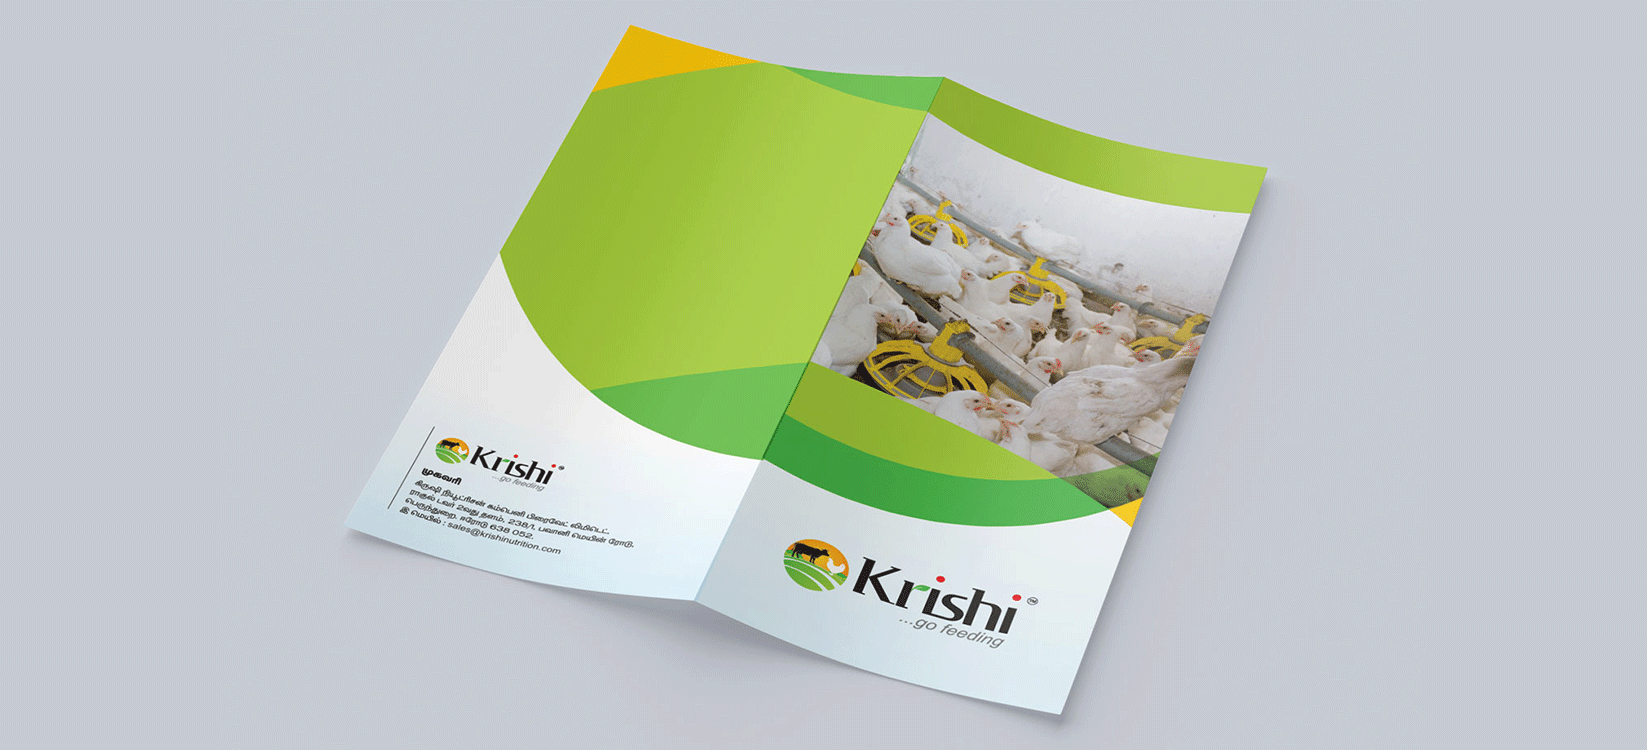 krishi-brand